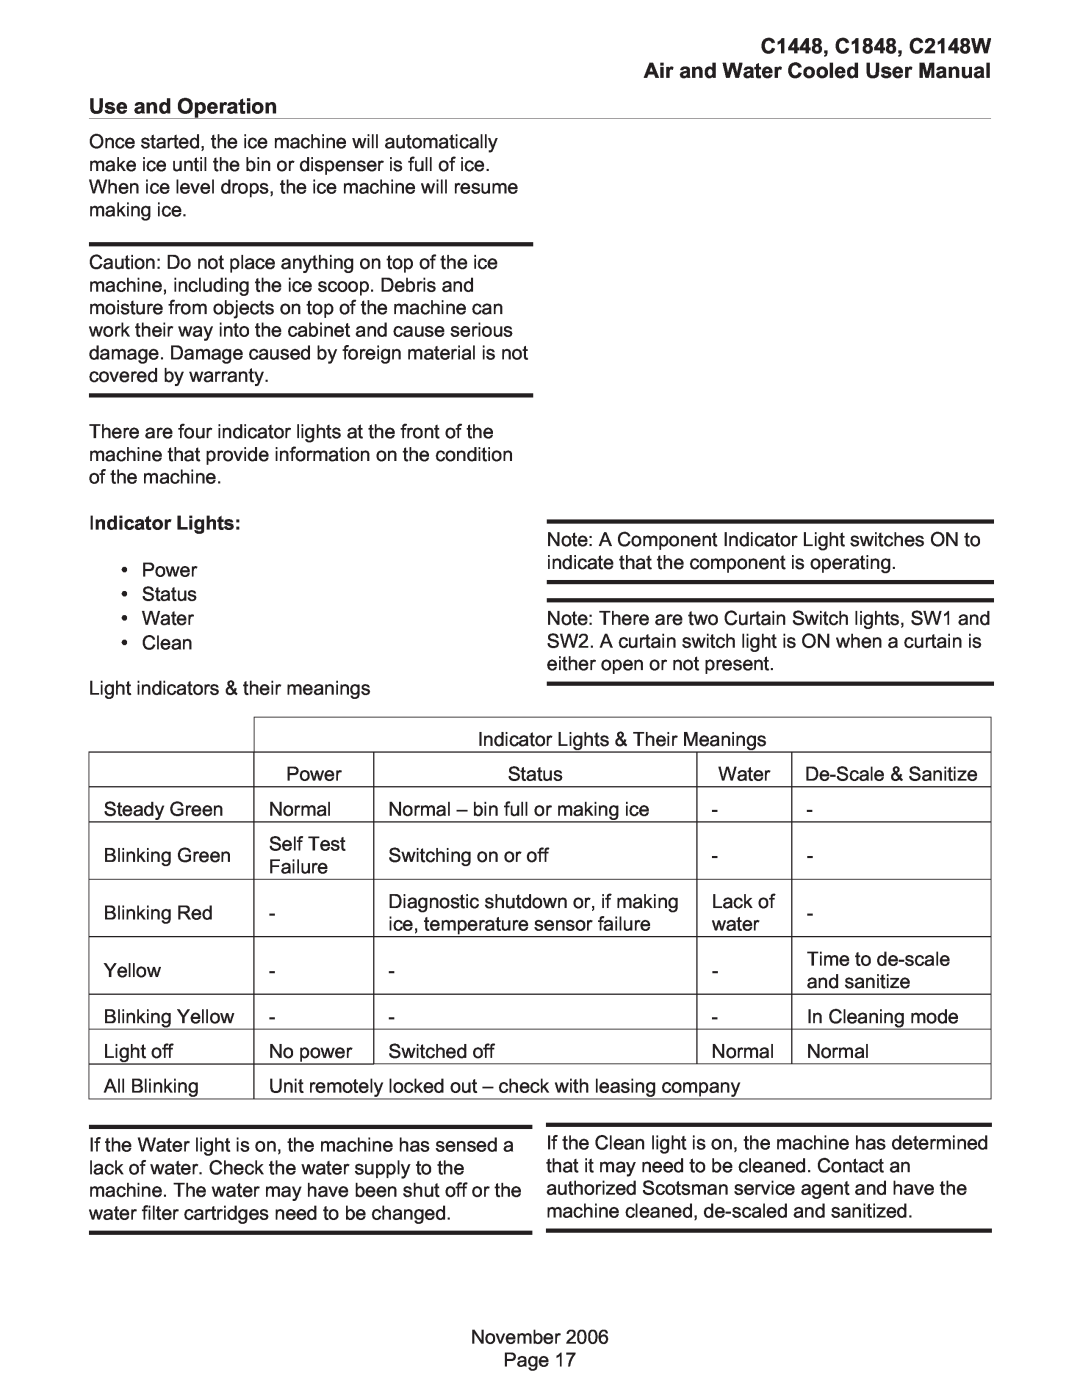 Scotsman Ice user manual Use and Operation, Indicator Lights, C1448, C1848, C2148W 